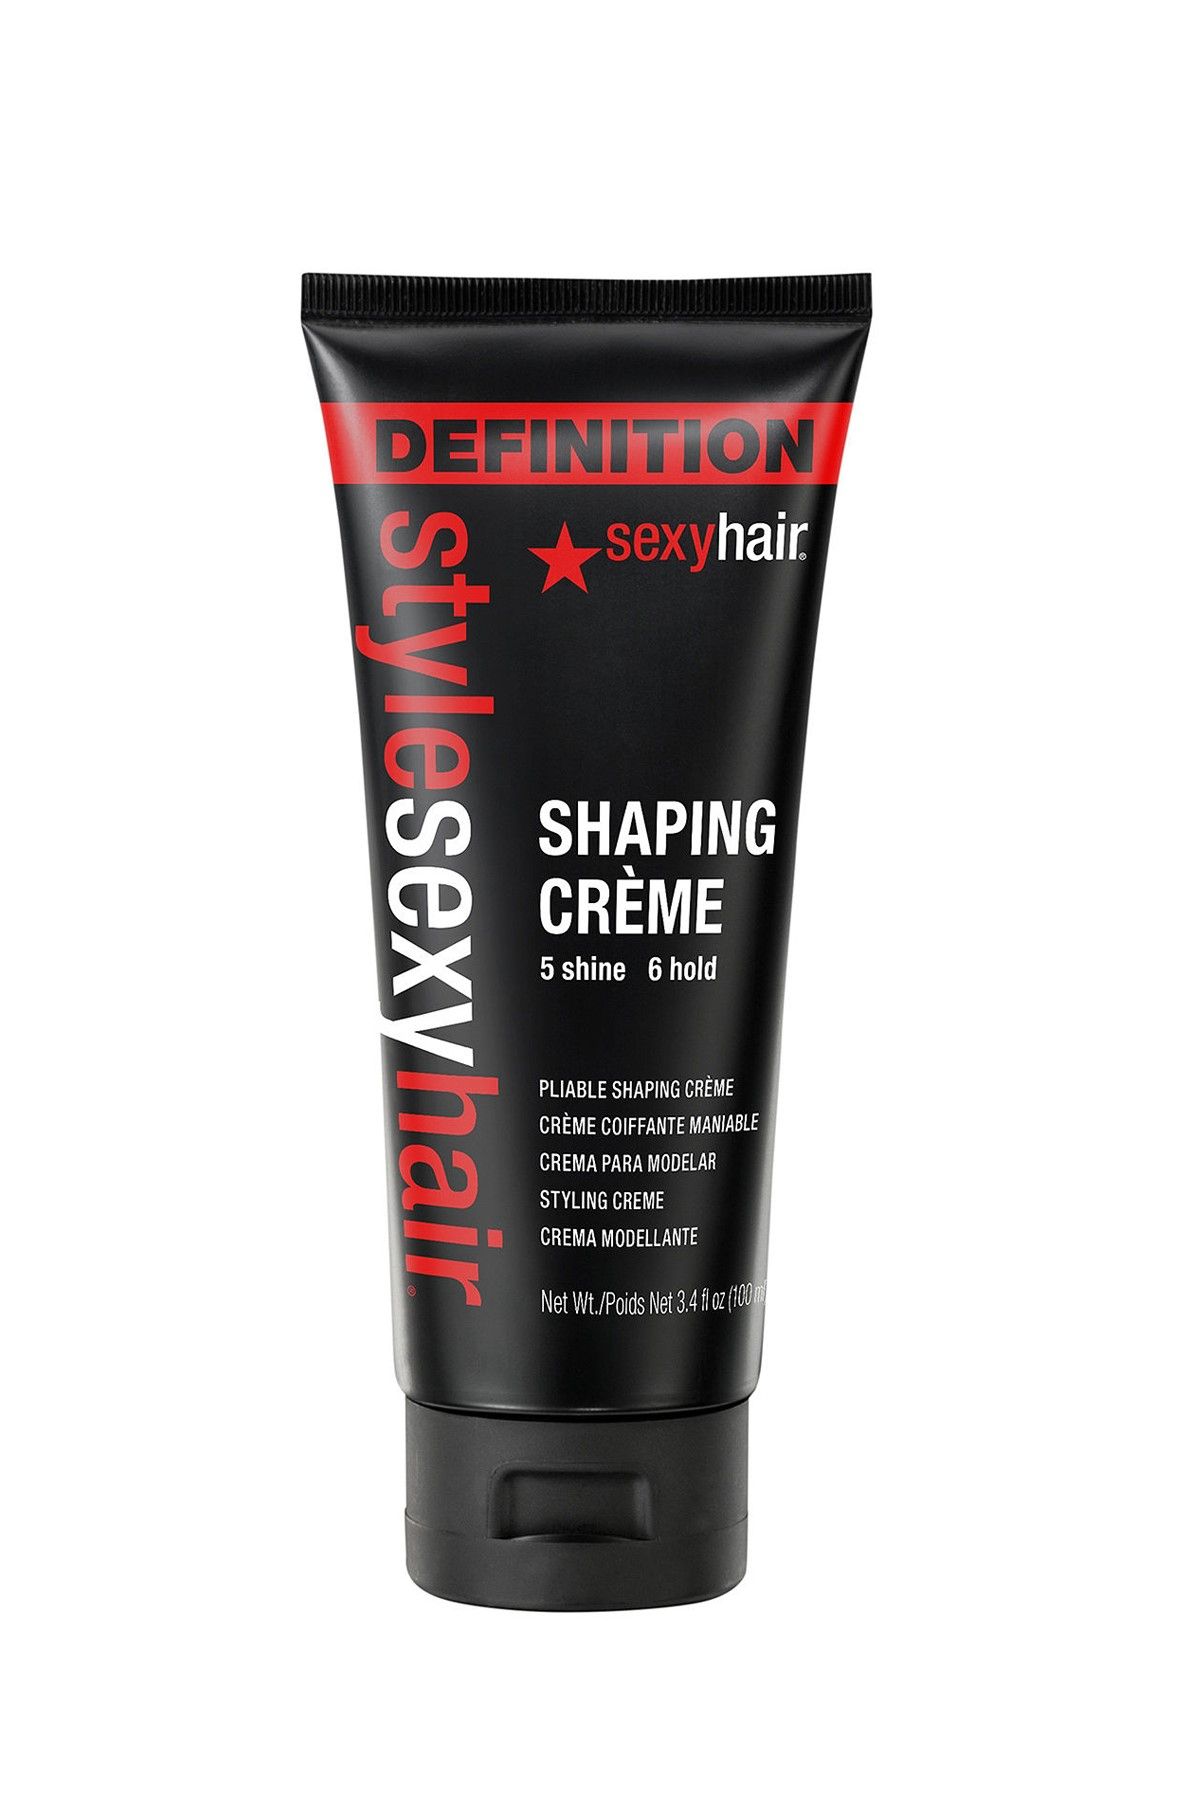 Sexy Hair Şekillendirici Saç Kremi - Sysh Shaping Creme Pliable Shaping Creme 100 ml 646630013159